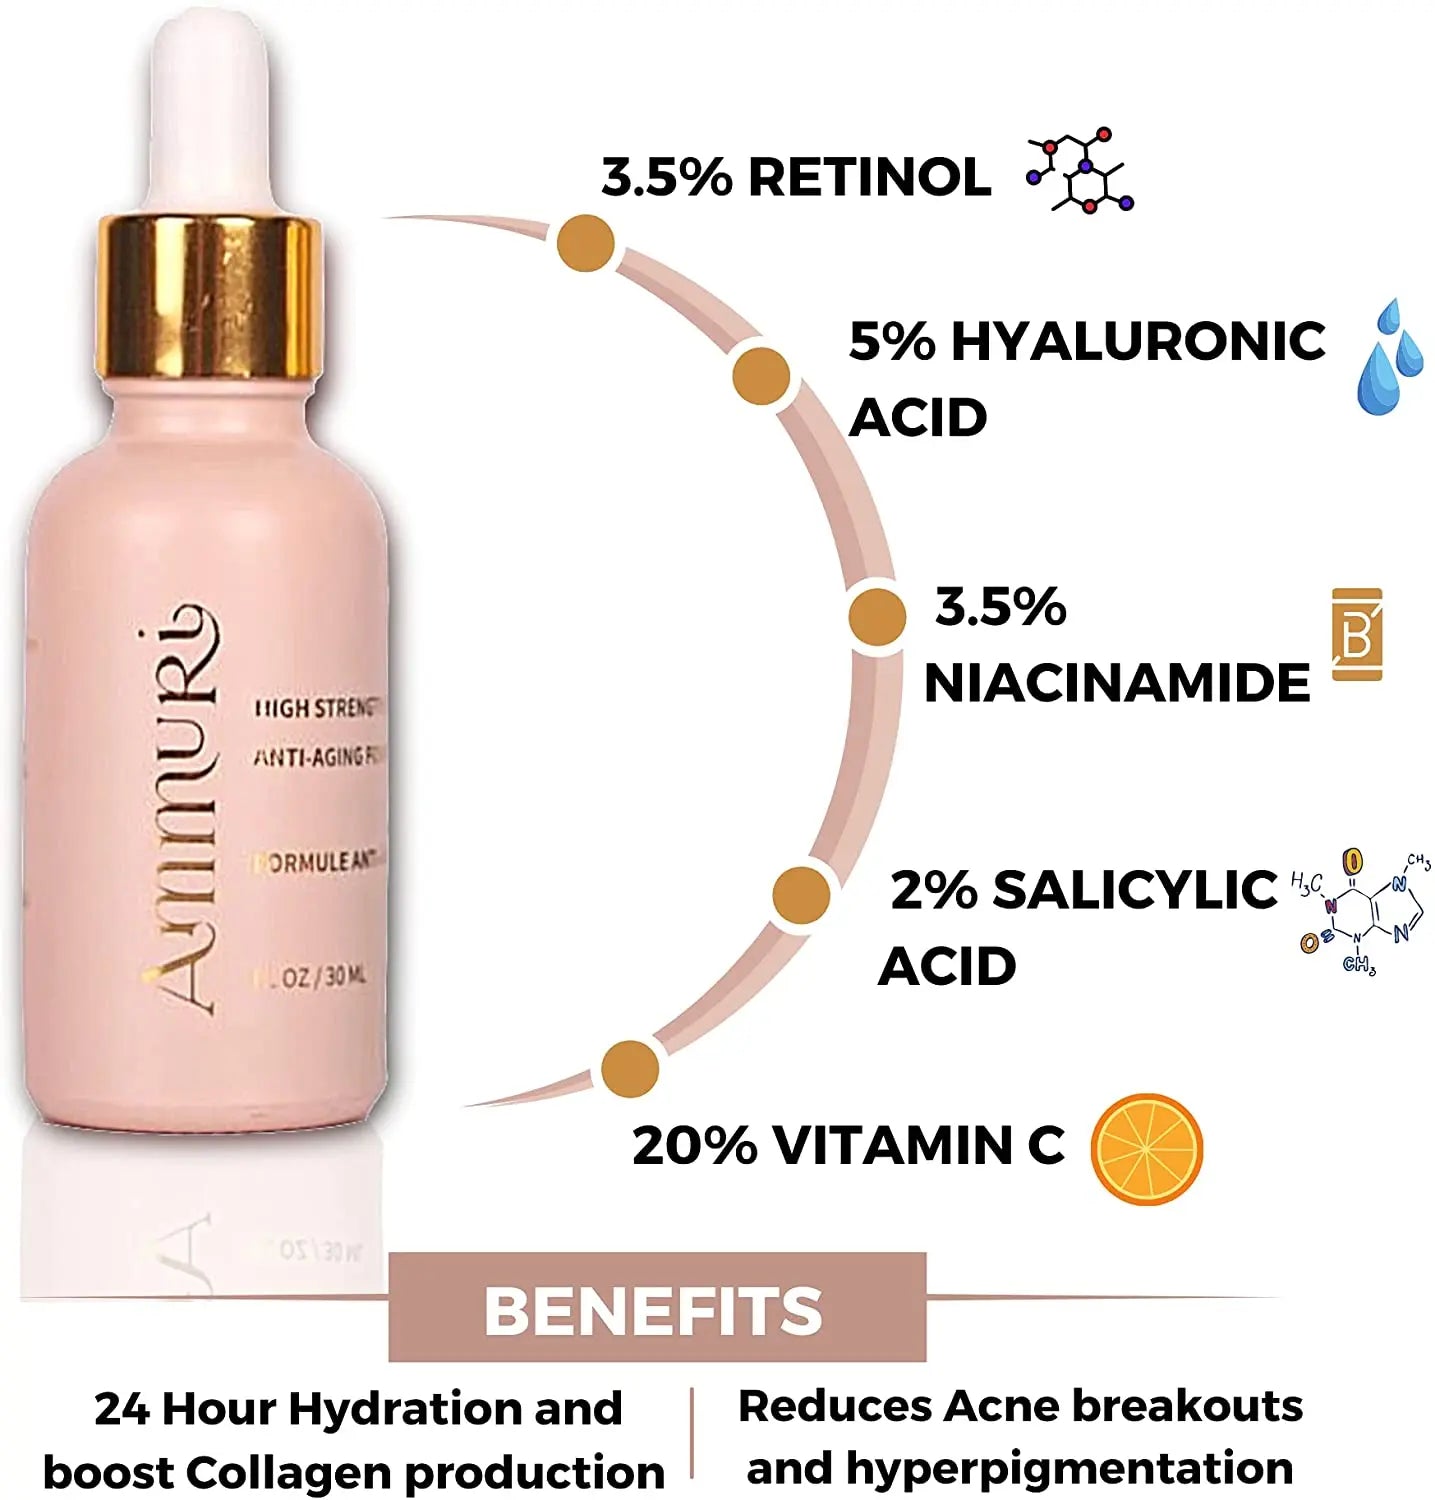 High Strength Retinol Serum For Face Lift 3.5% Retinol Anti Aging Face Serum For Women & Men Best for Skin Care, Face Care, Acne Treatment - 30ml Ammuri Skincare